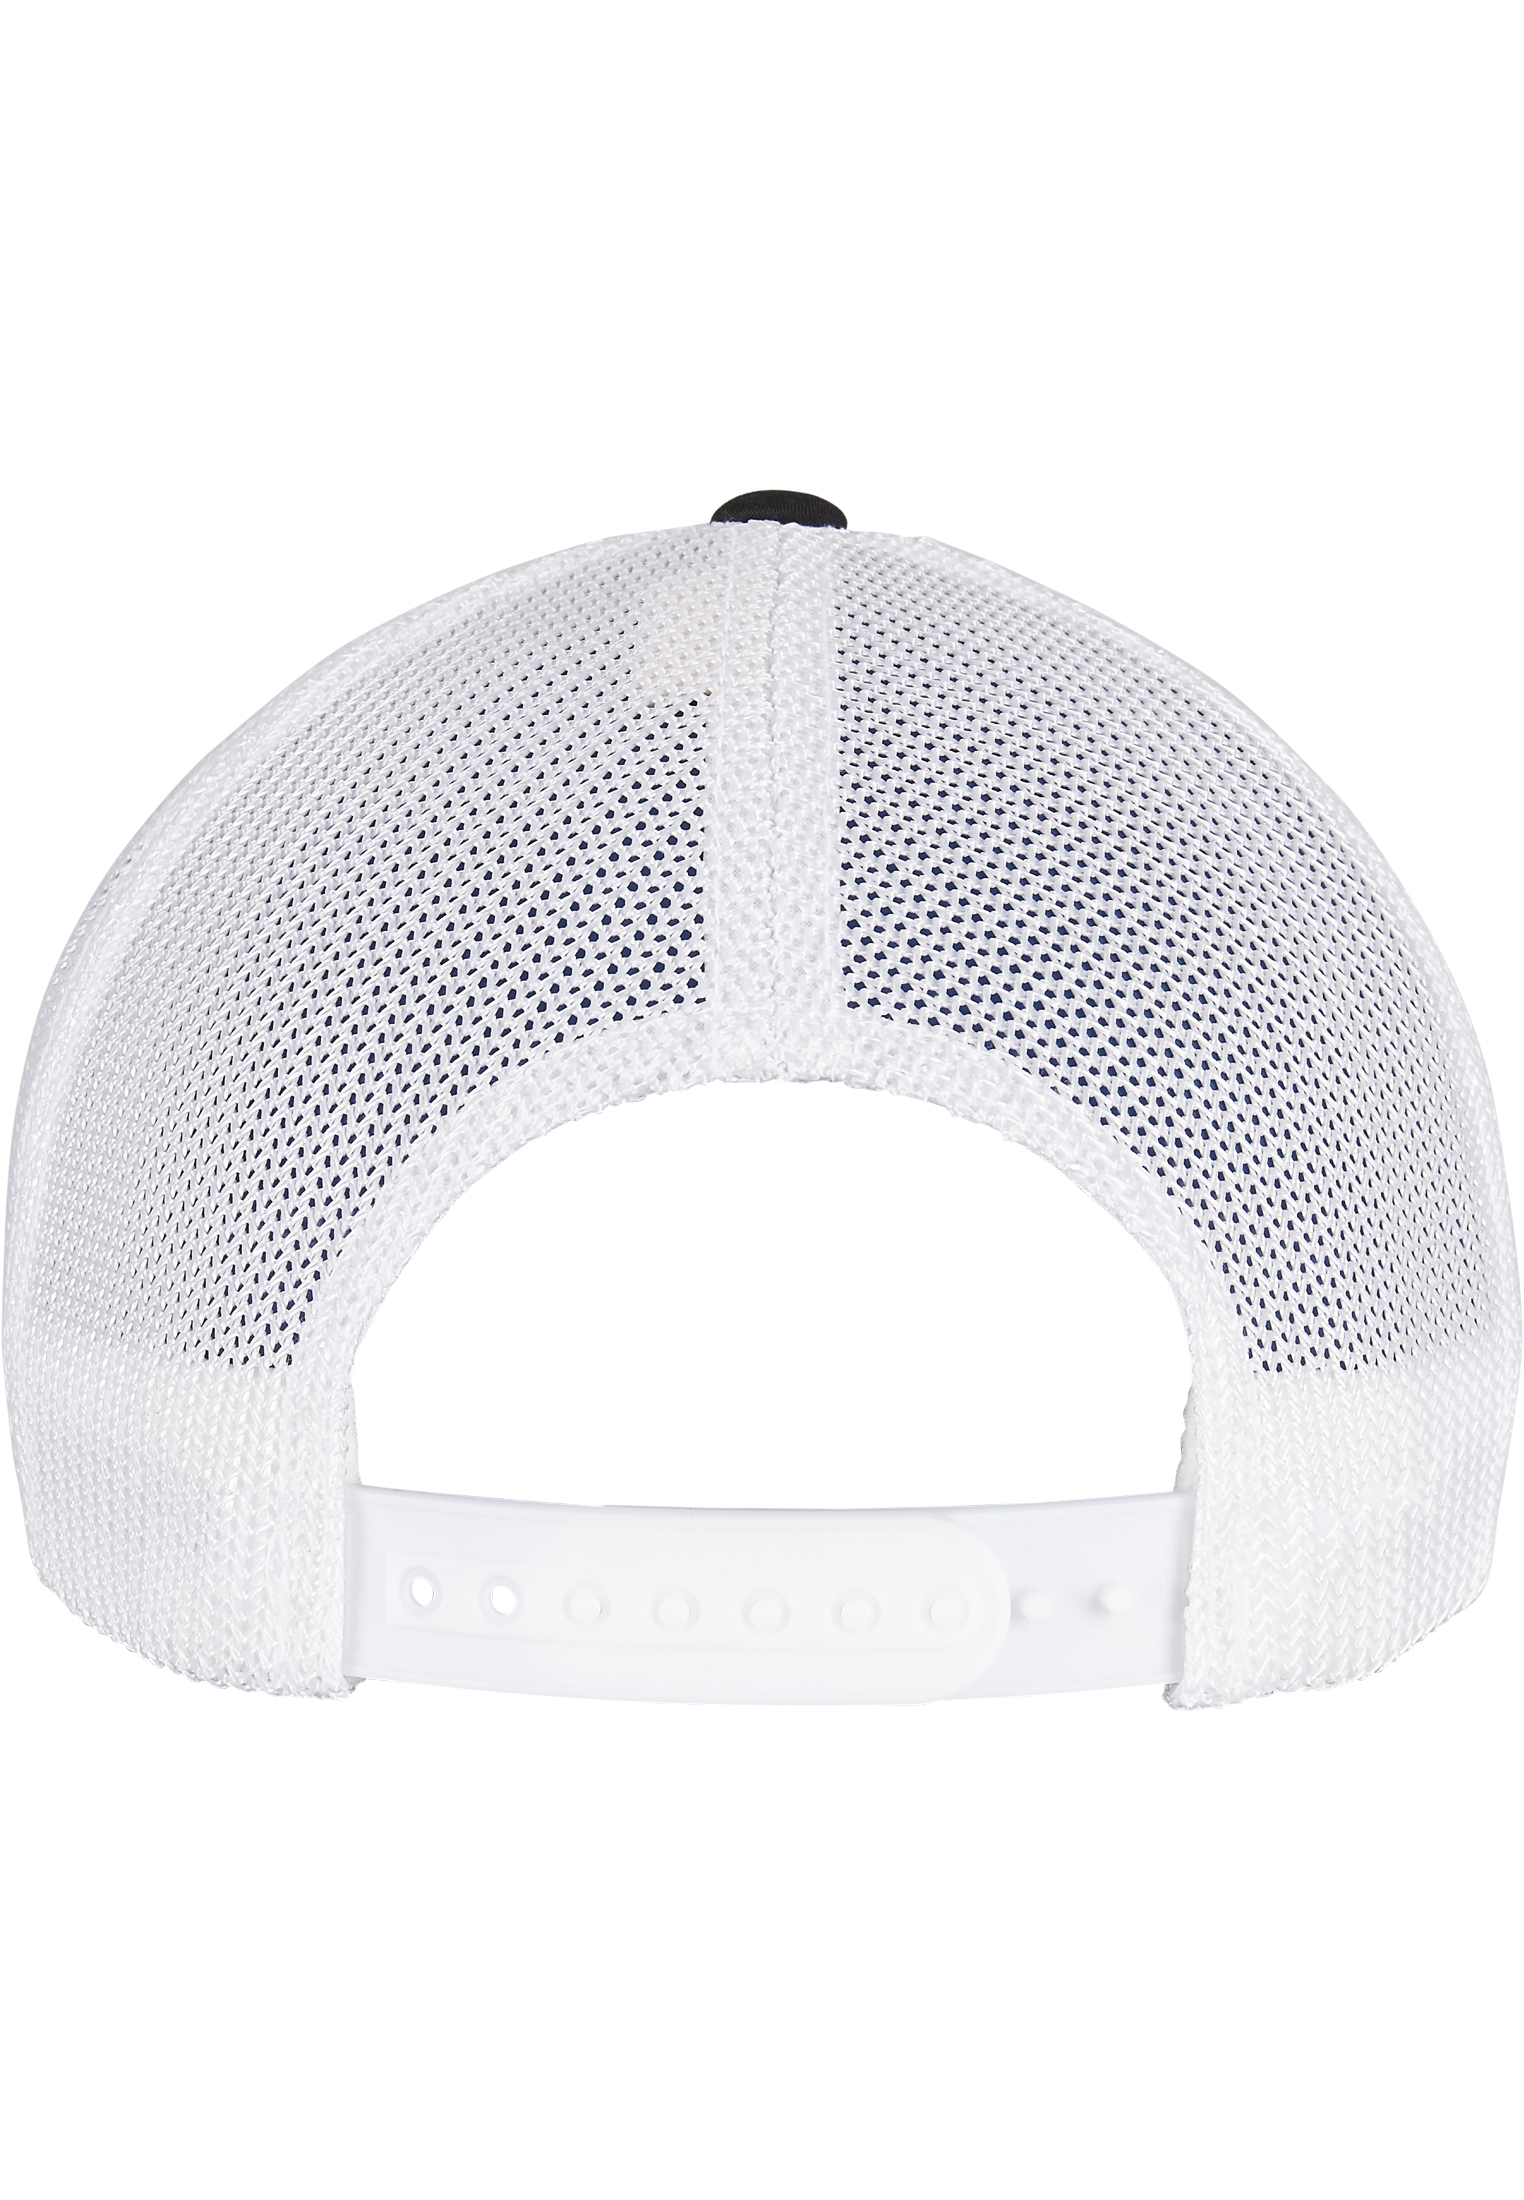 Nachhaltig FLEXFIT 110 RECYCLED CAP 2-TONE in Farbe black/white